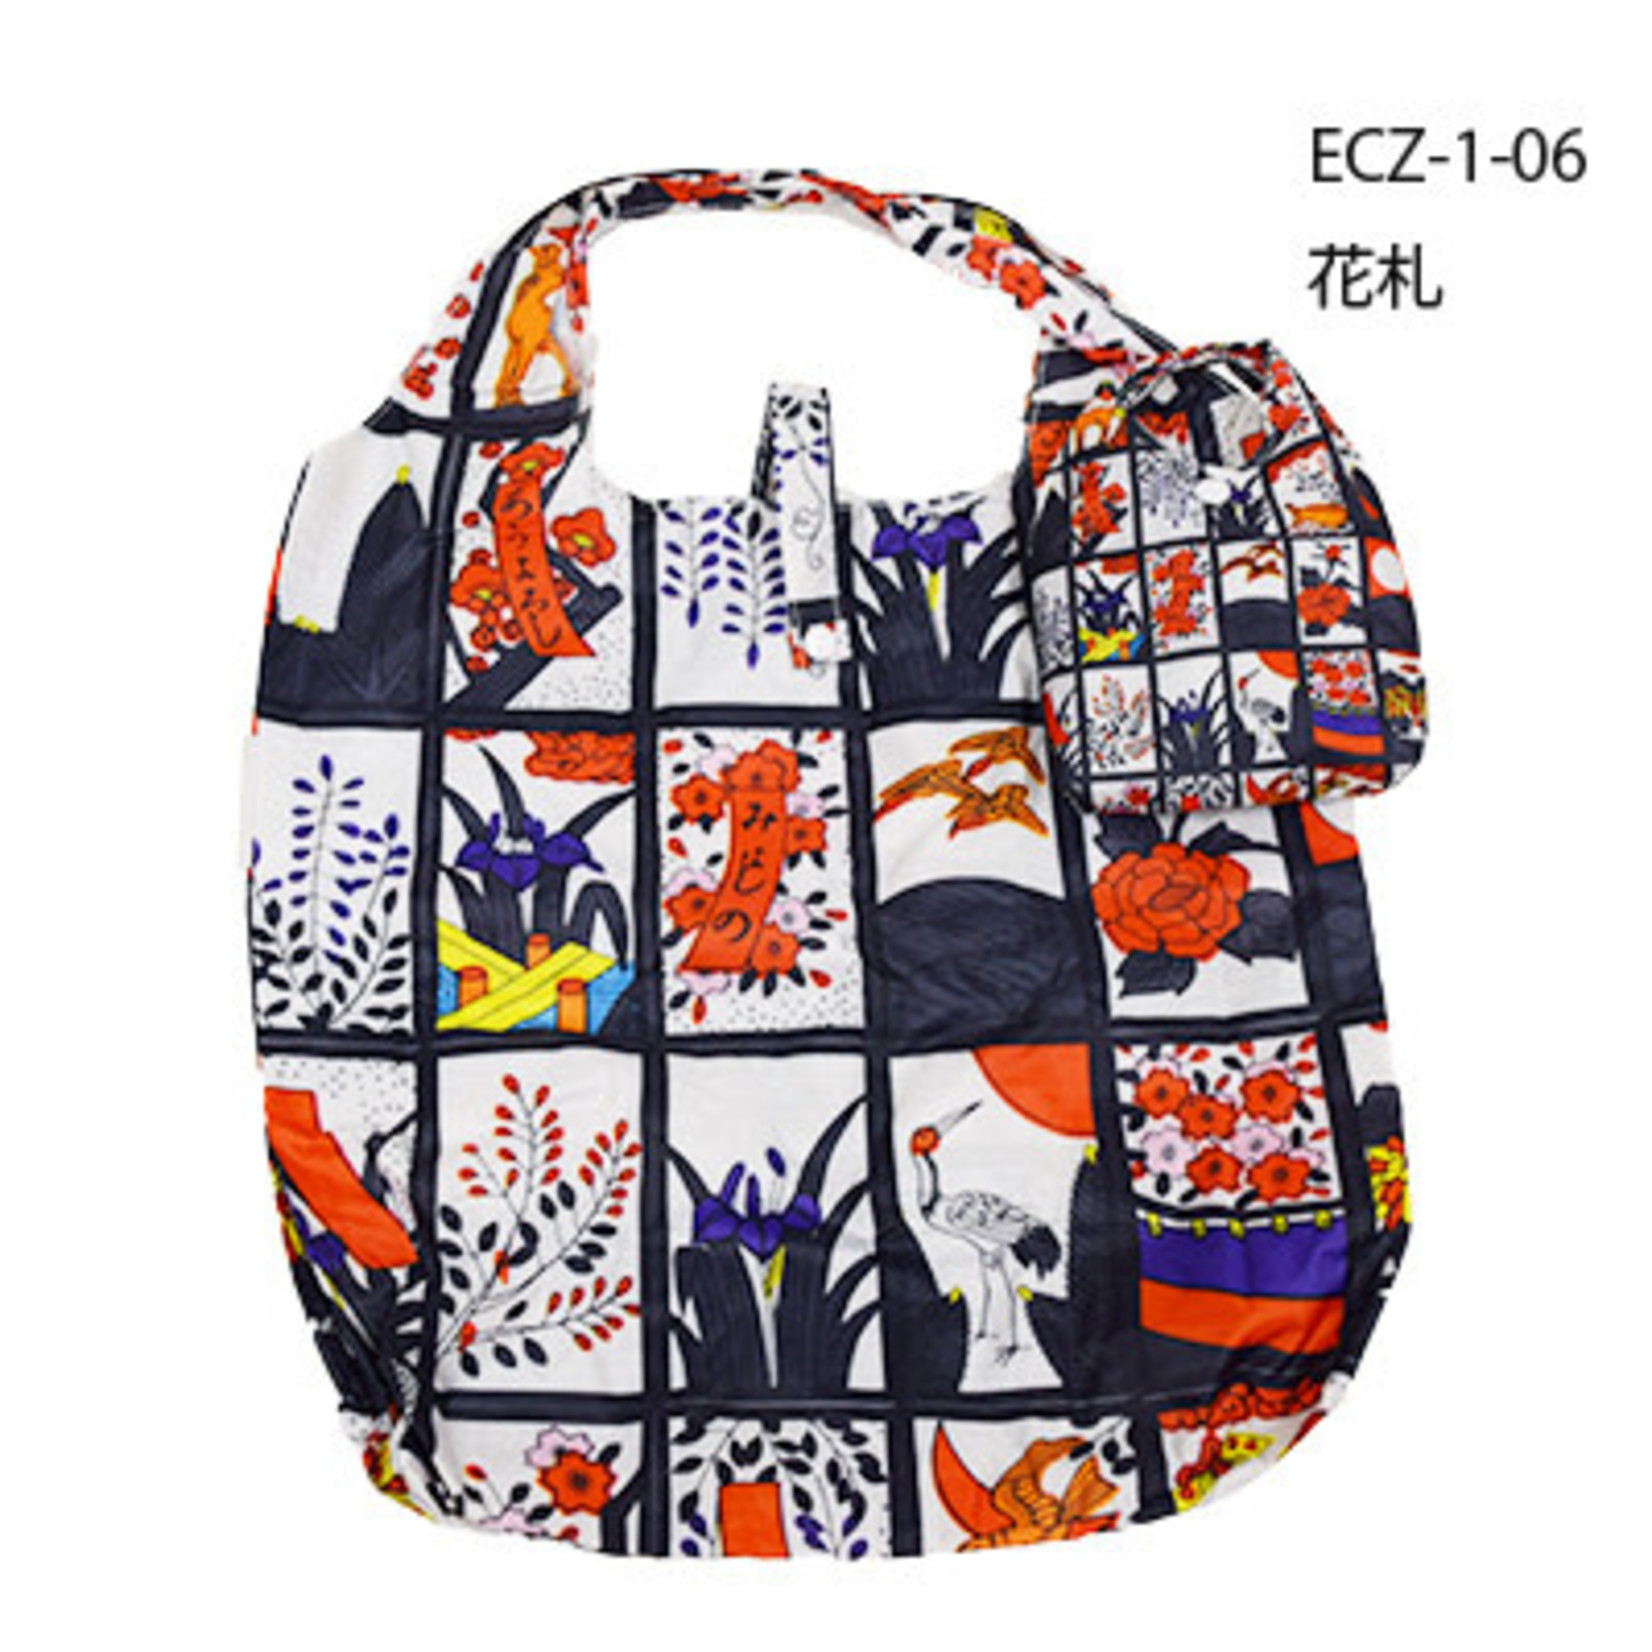 Ecology Shopping Bag "Hanafuda" ECZ-1-06